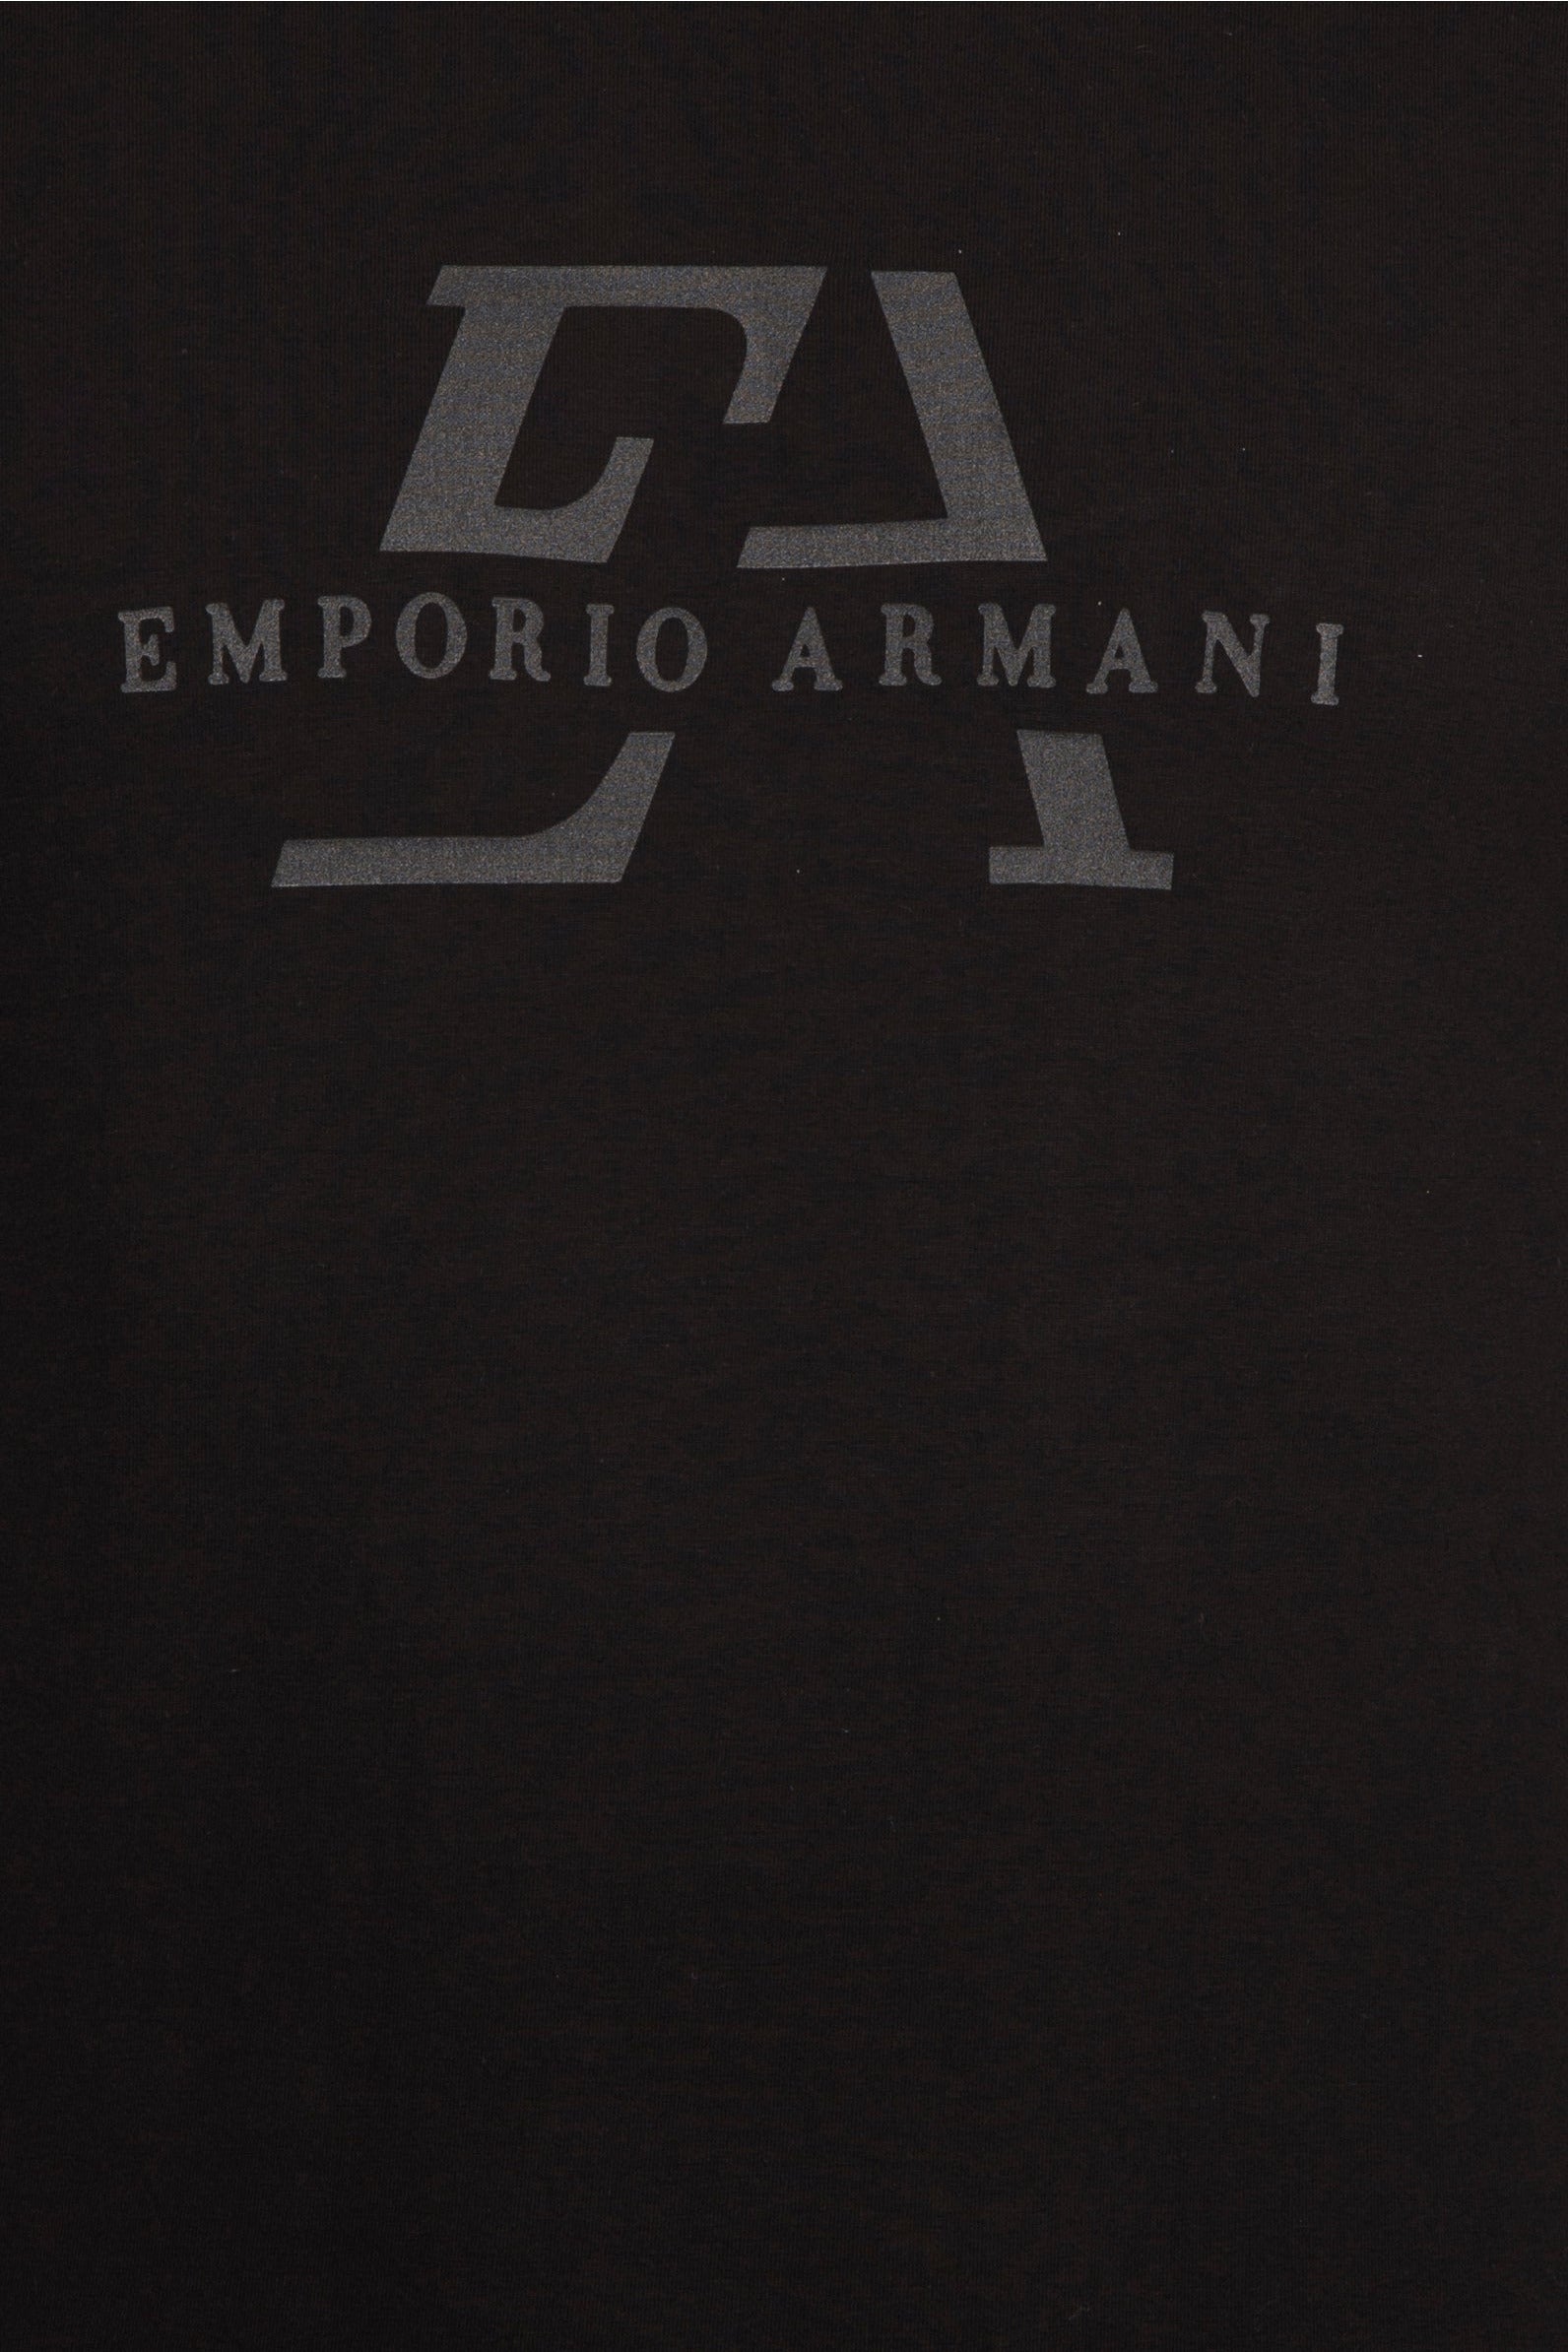 EA7 Emporio Armani T Shirt